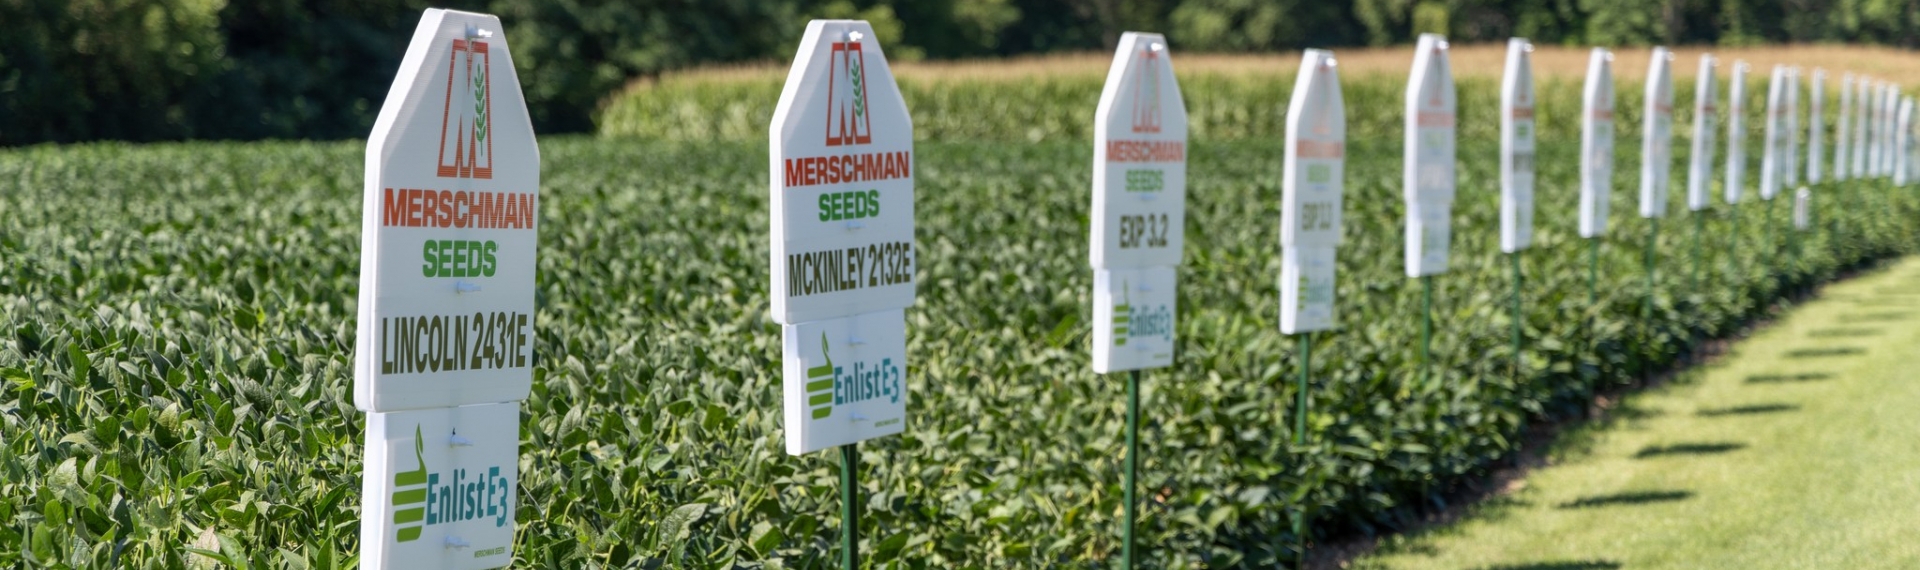 Merschman Seeds signs in a soybean field.